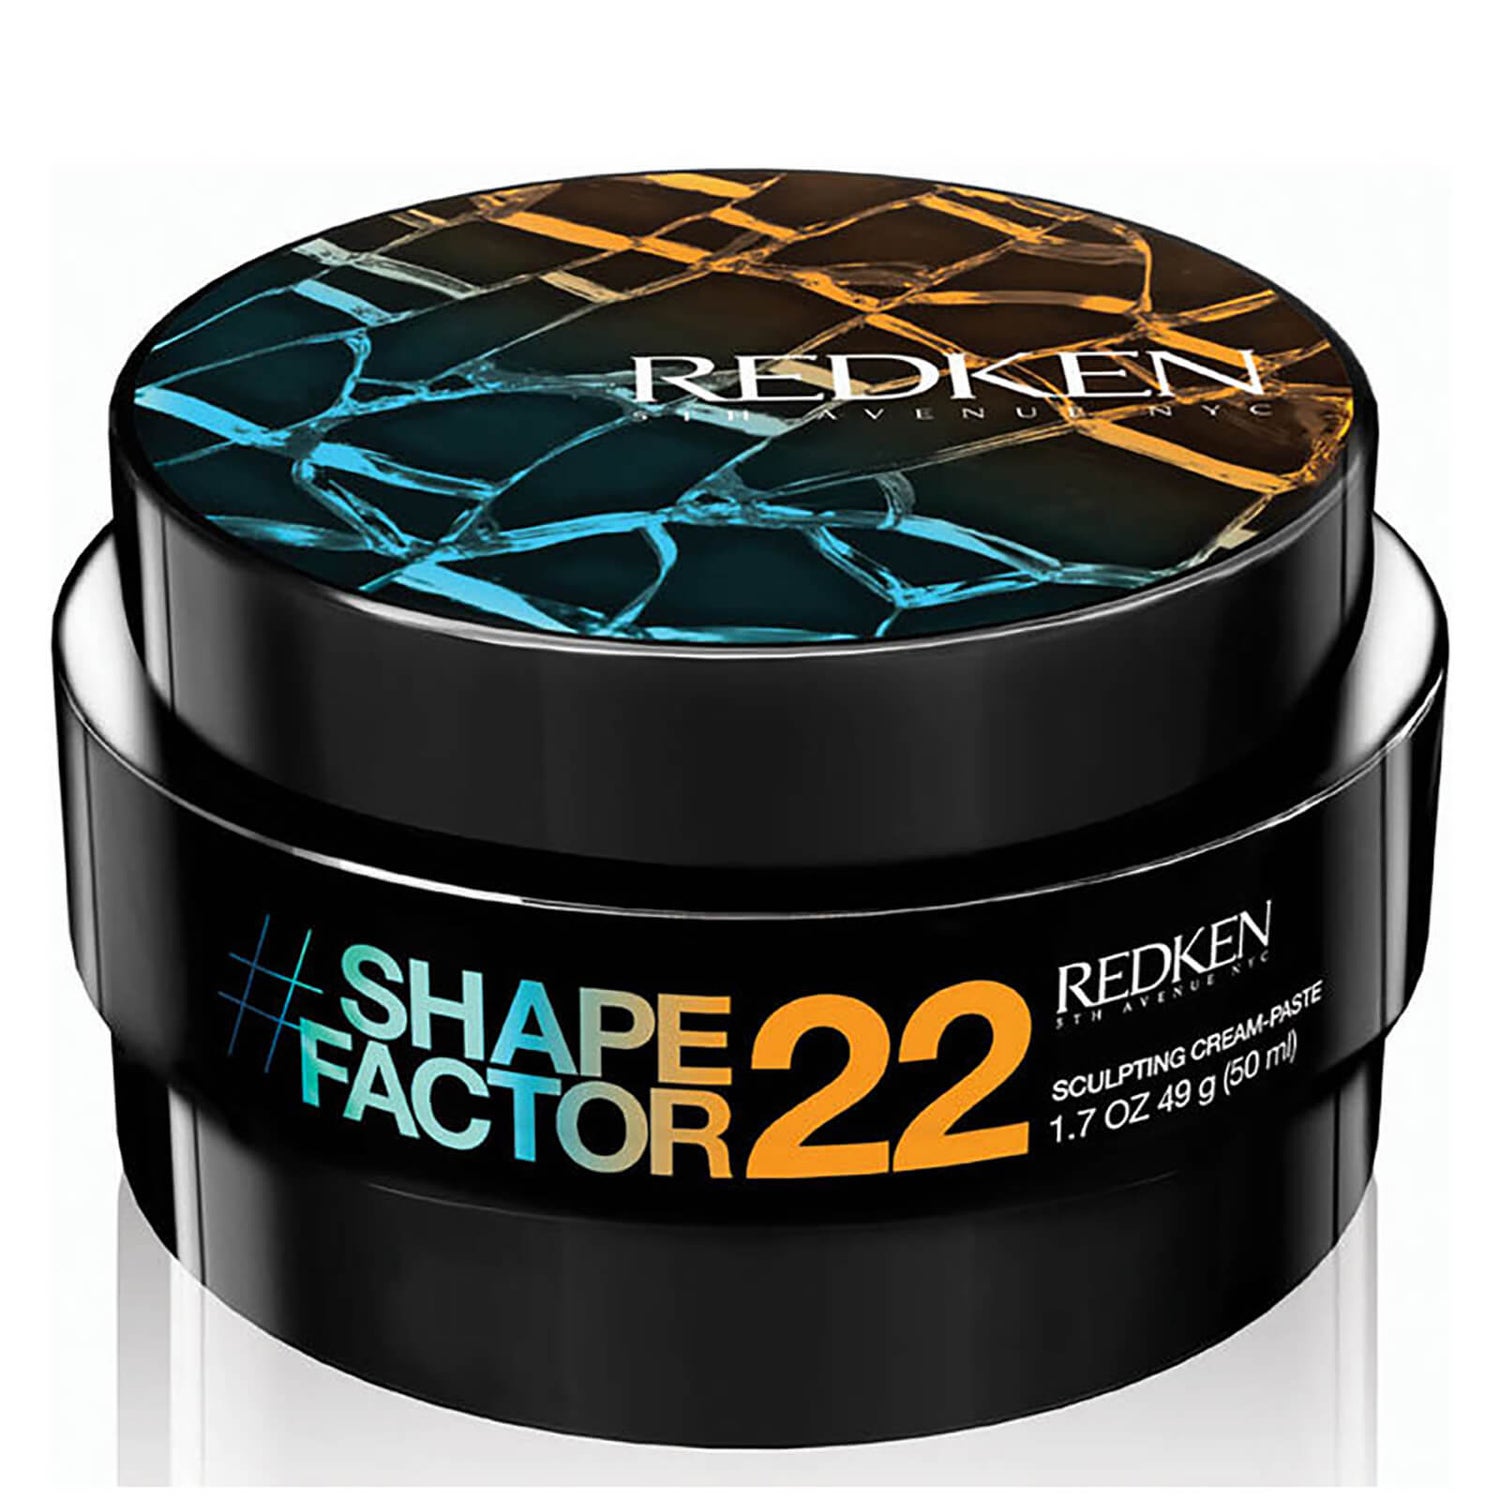 Redken Styling - Shape Factor 22 Sculpting Cream-Paste (50ml)